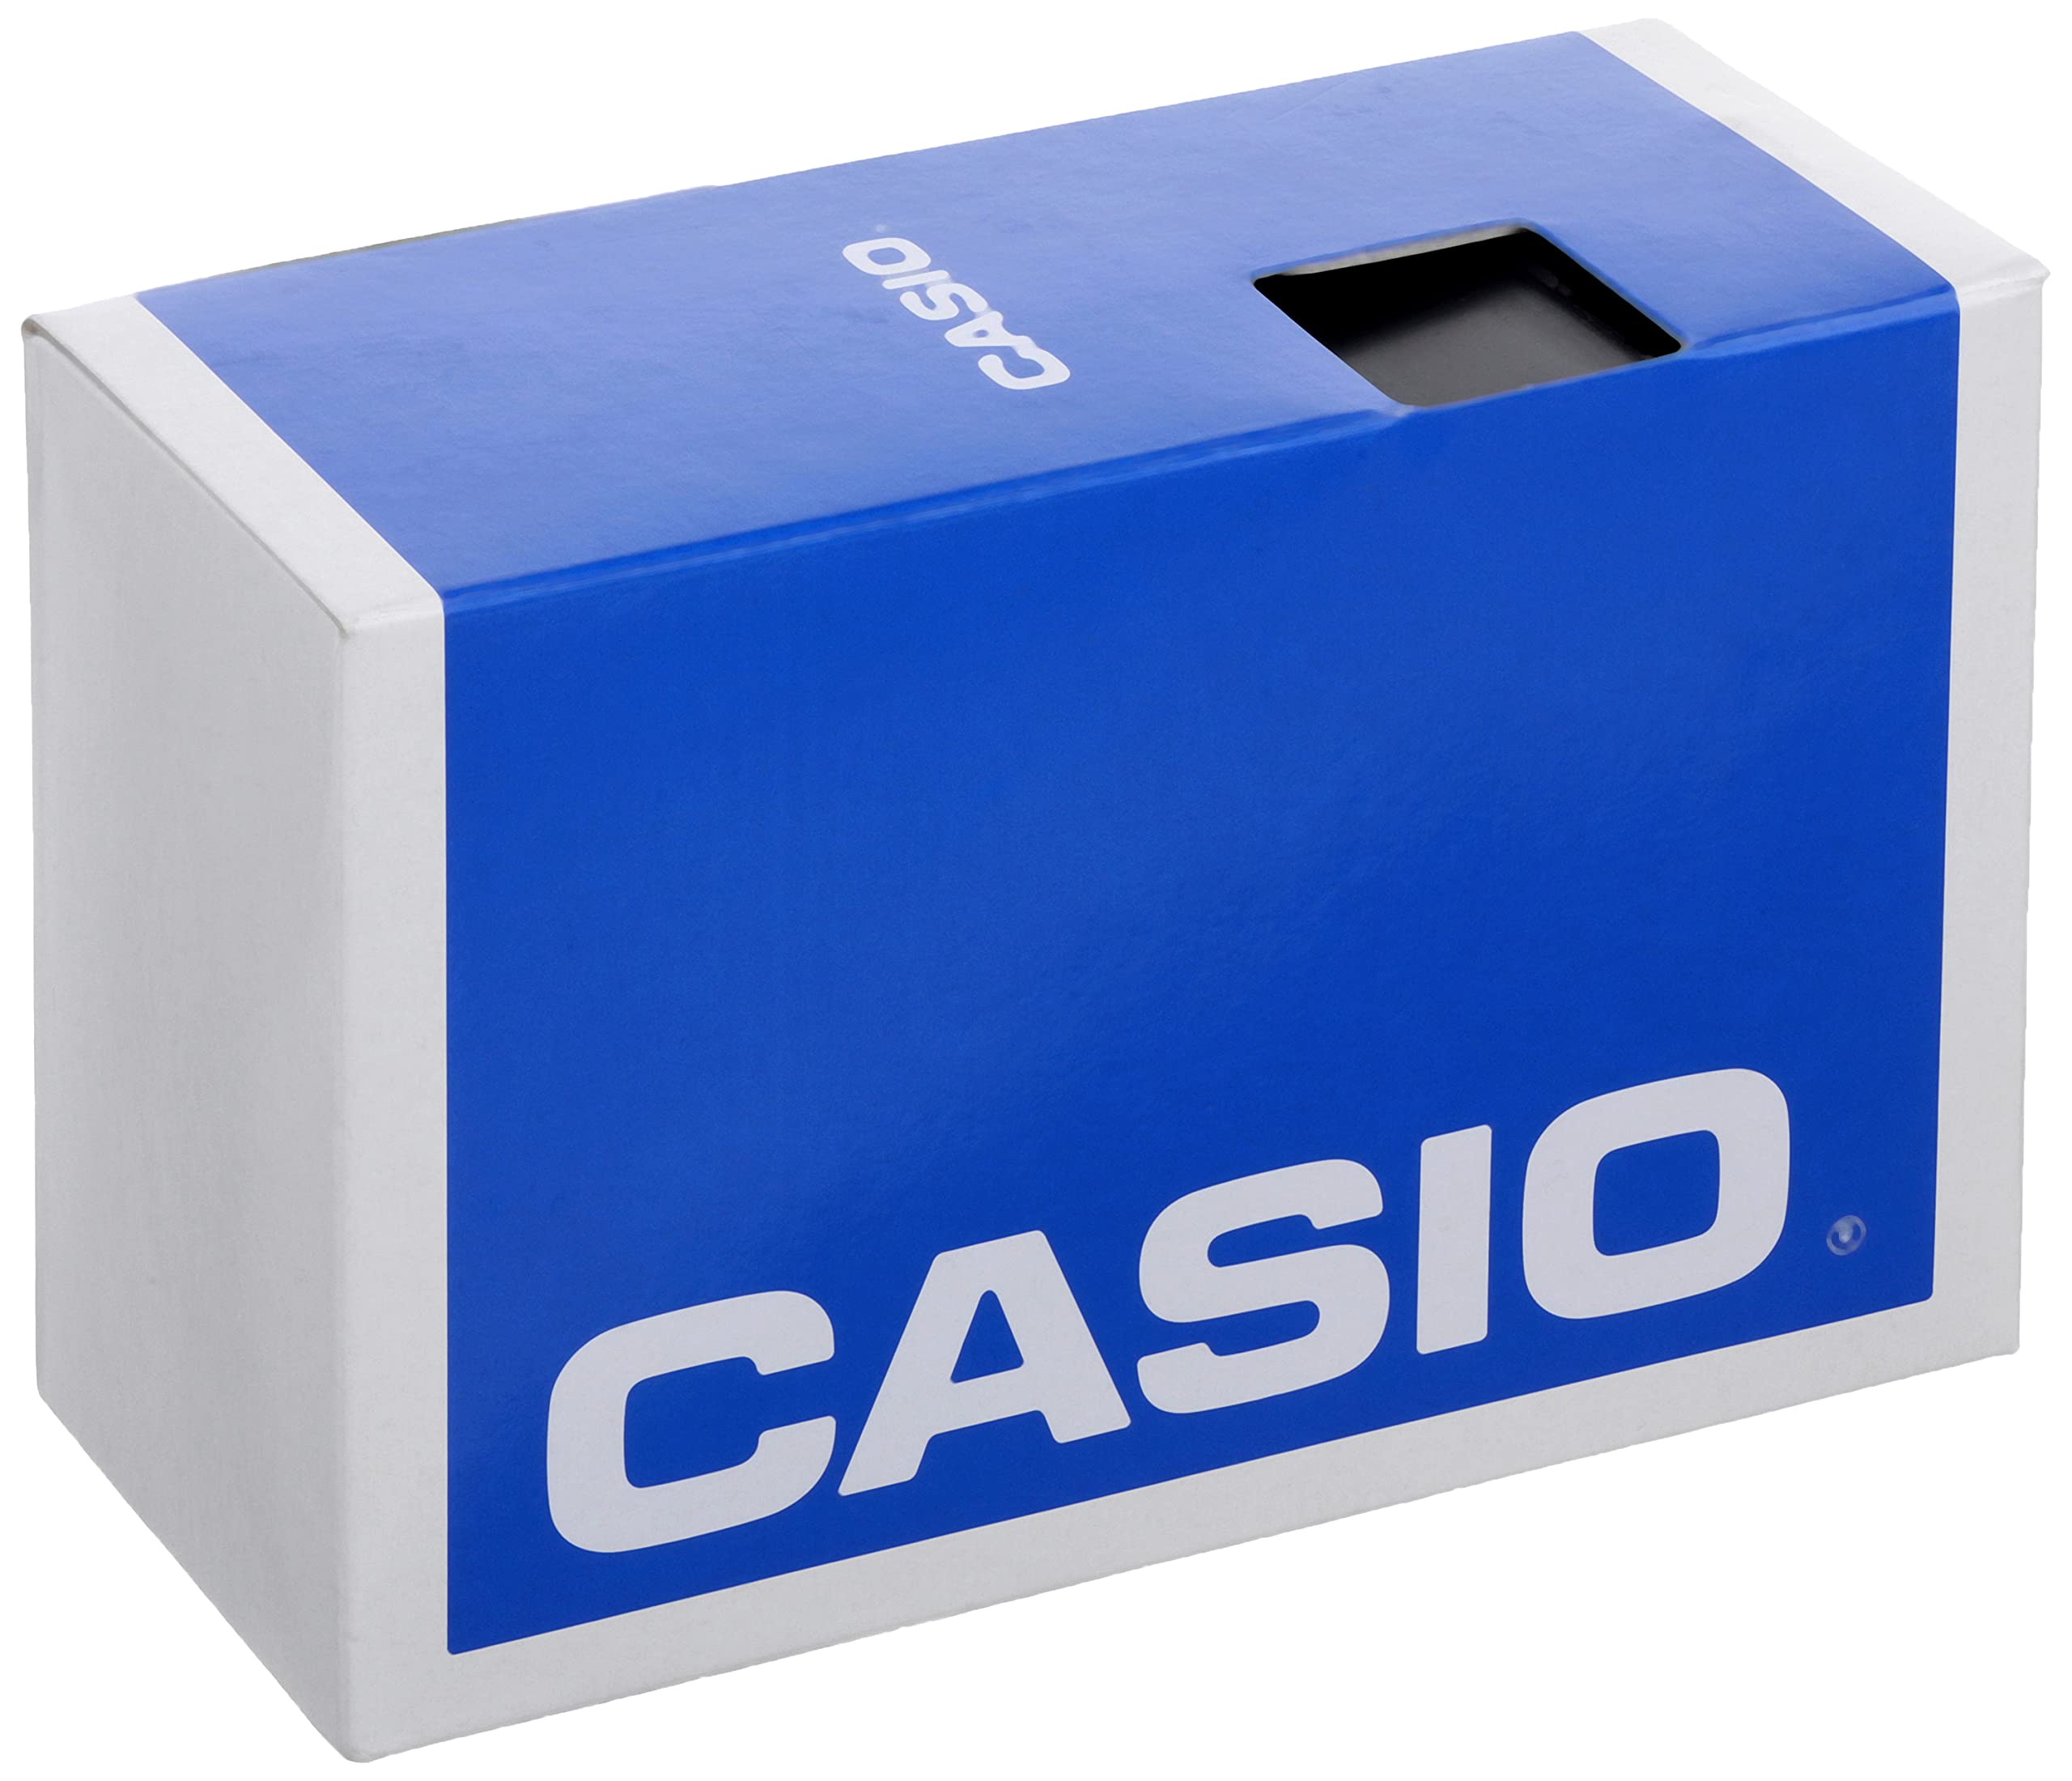 Casio Vibration Alarm Super Illuminator Stop Watch W735H-1BV